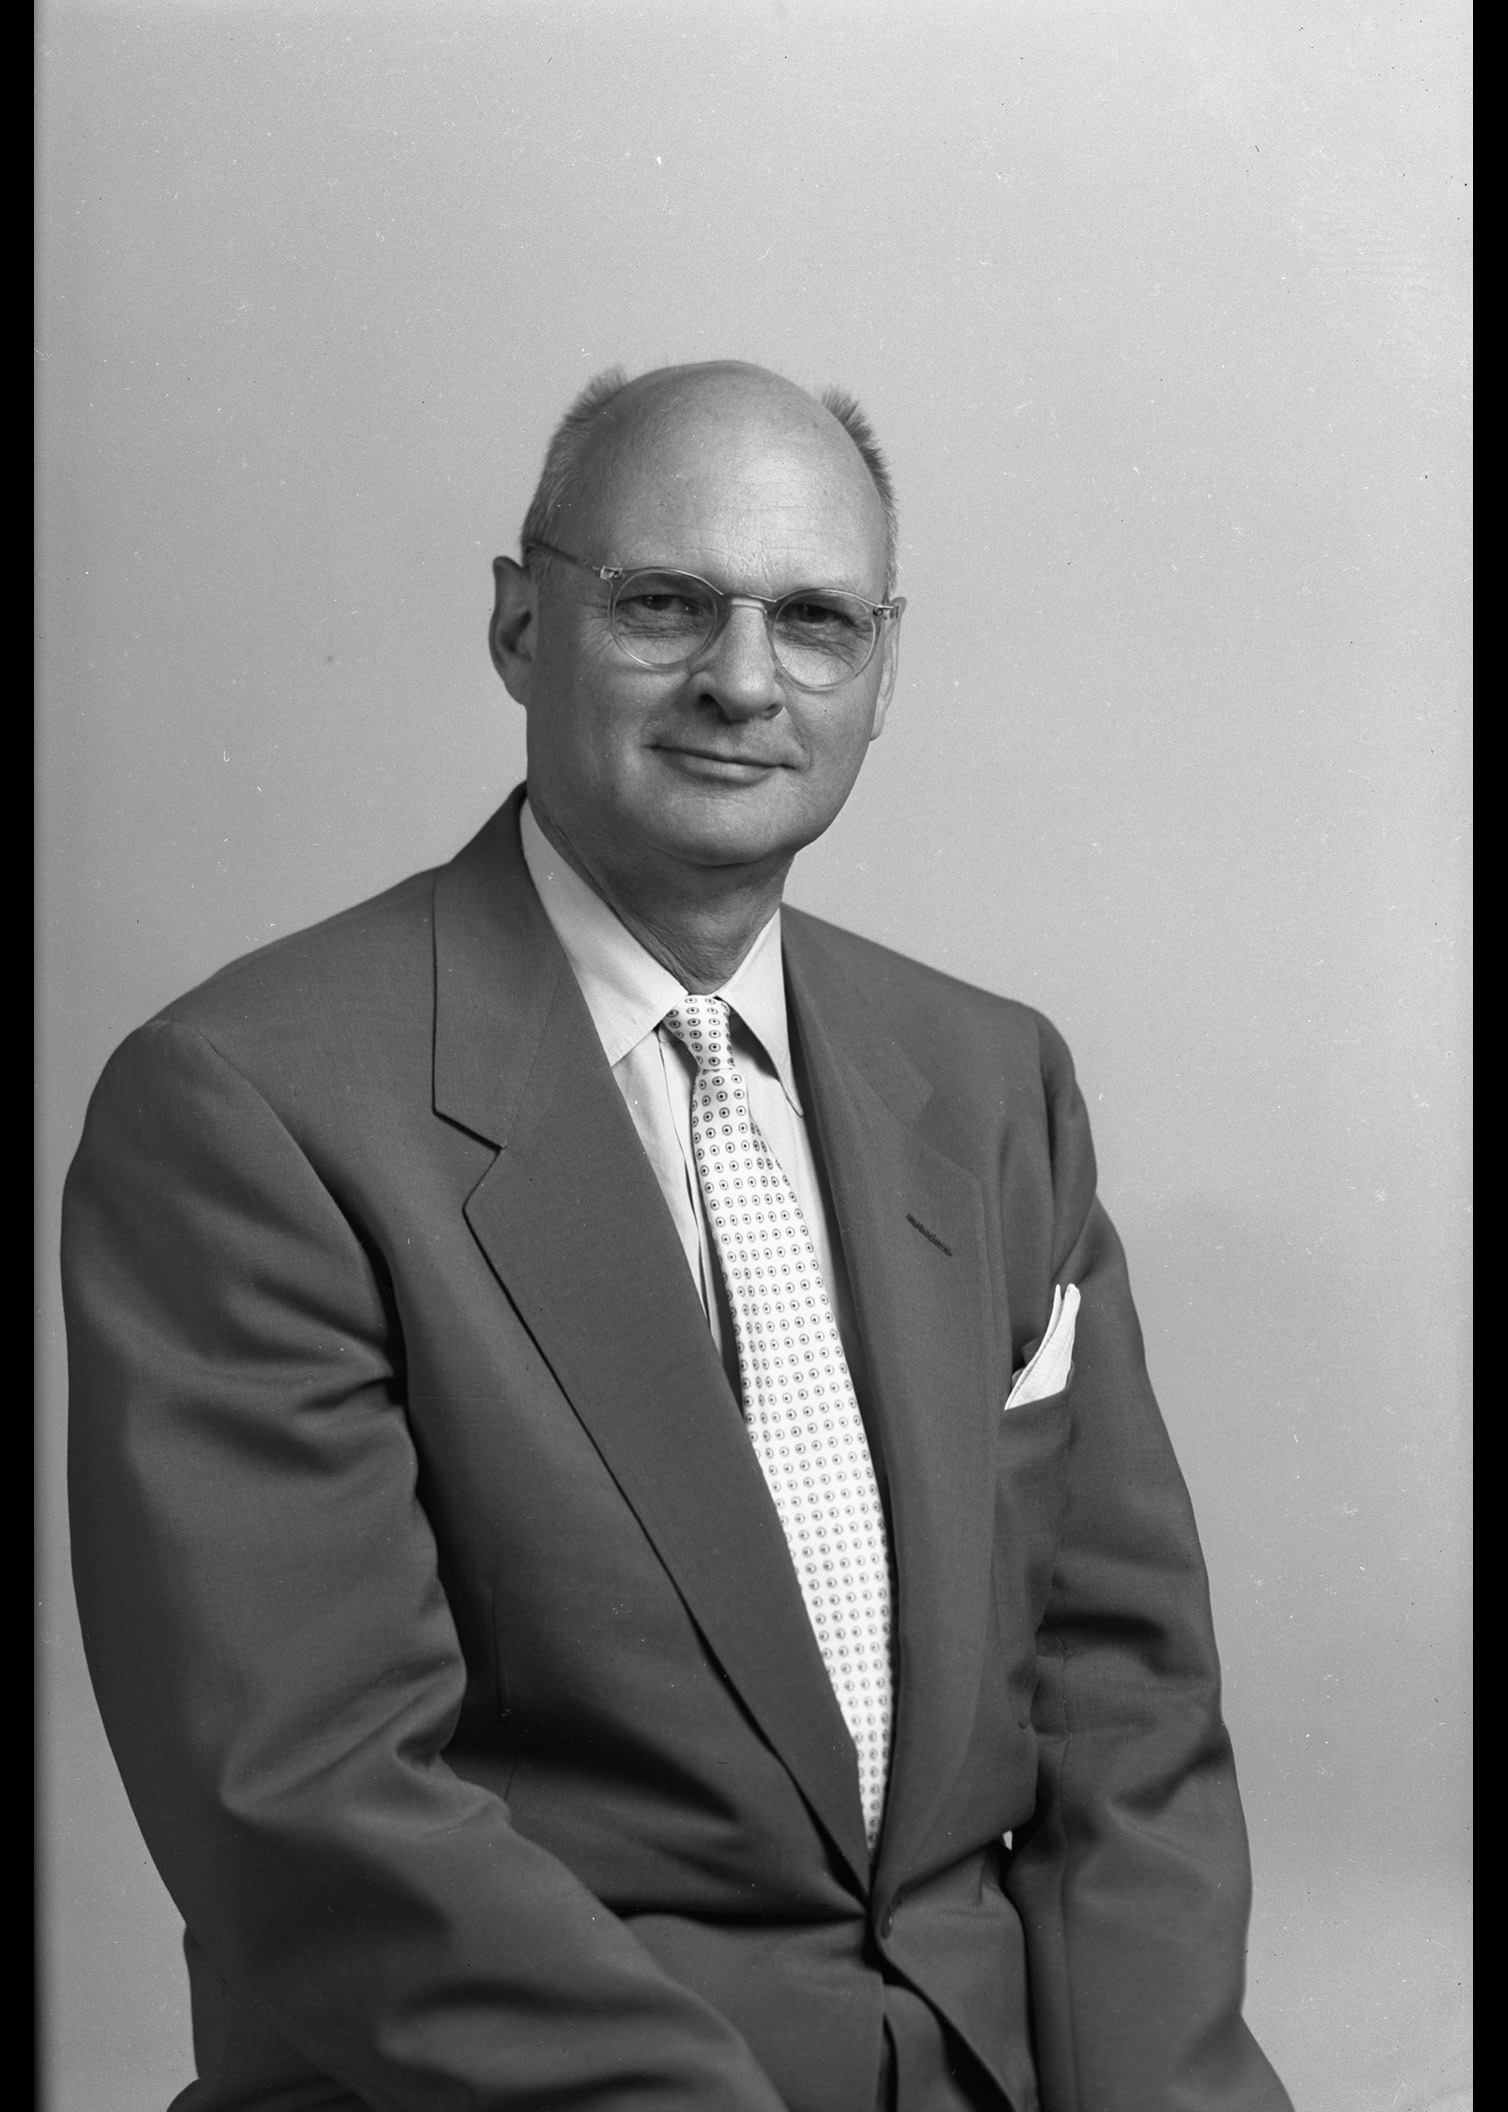 George Dinsmore Stoddard, 1946-1953 U of I President, circa 1953